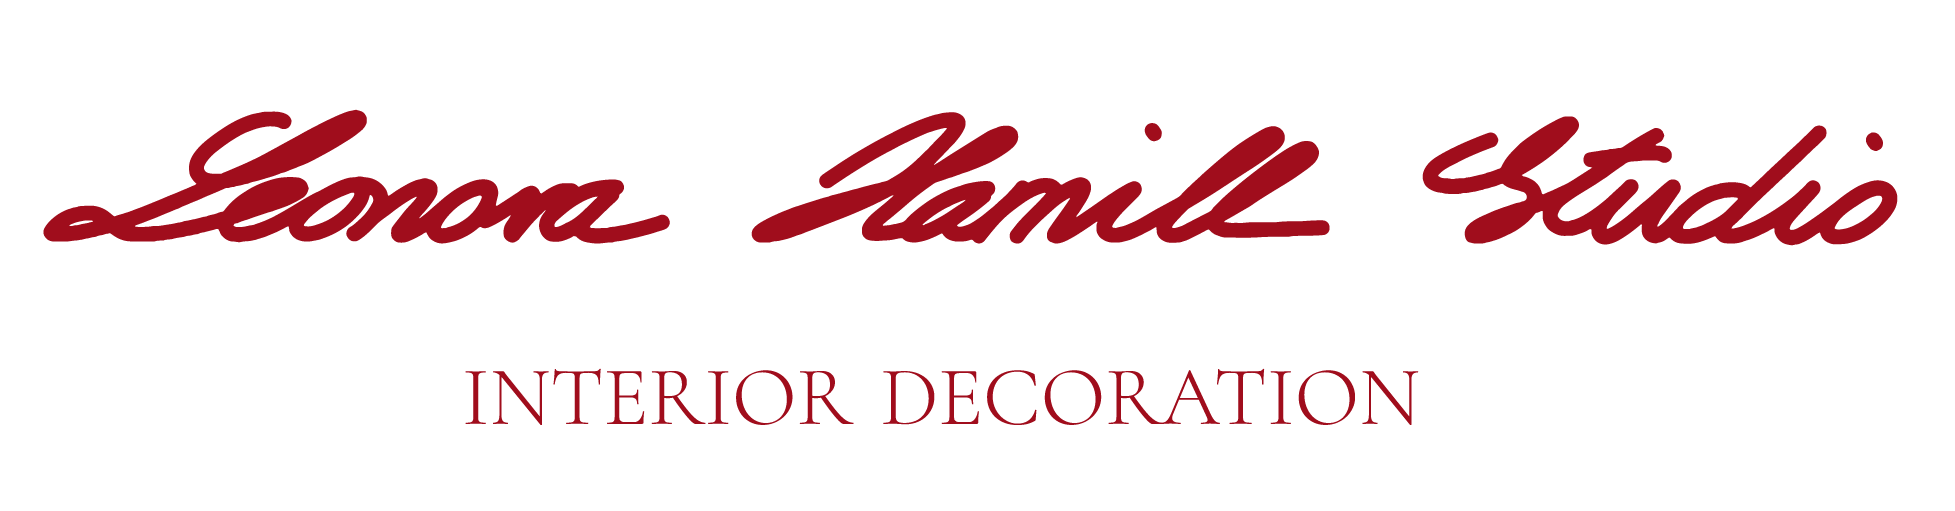 Leonora Hamill Studio Ltd